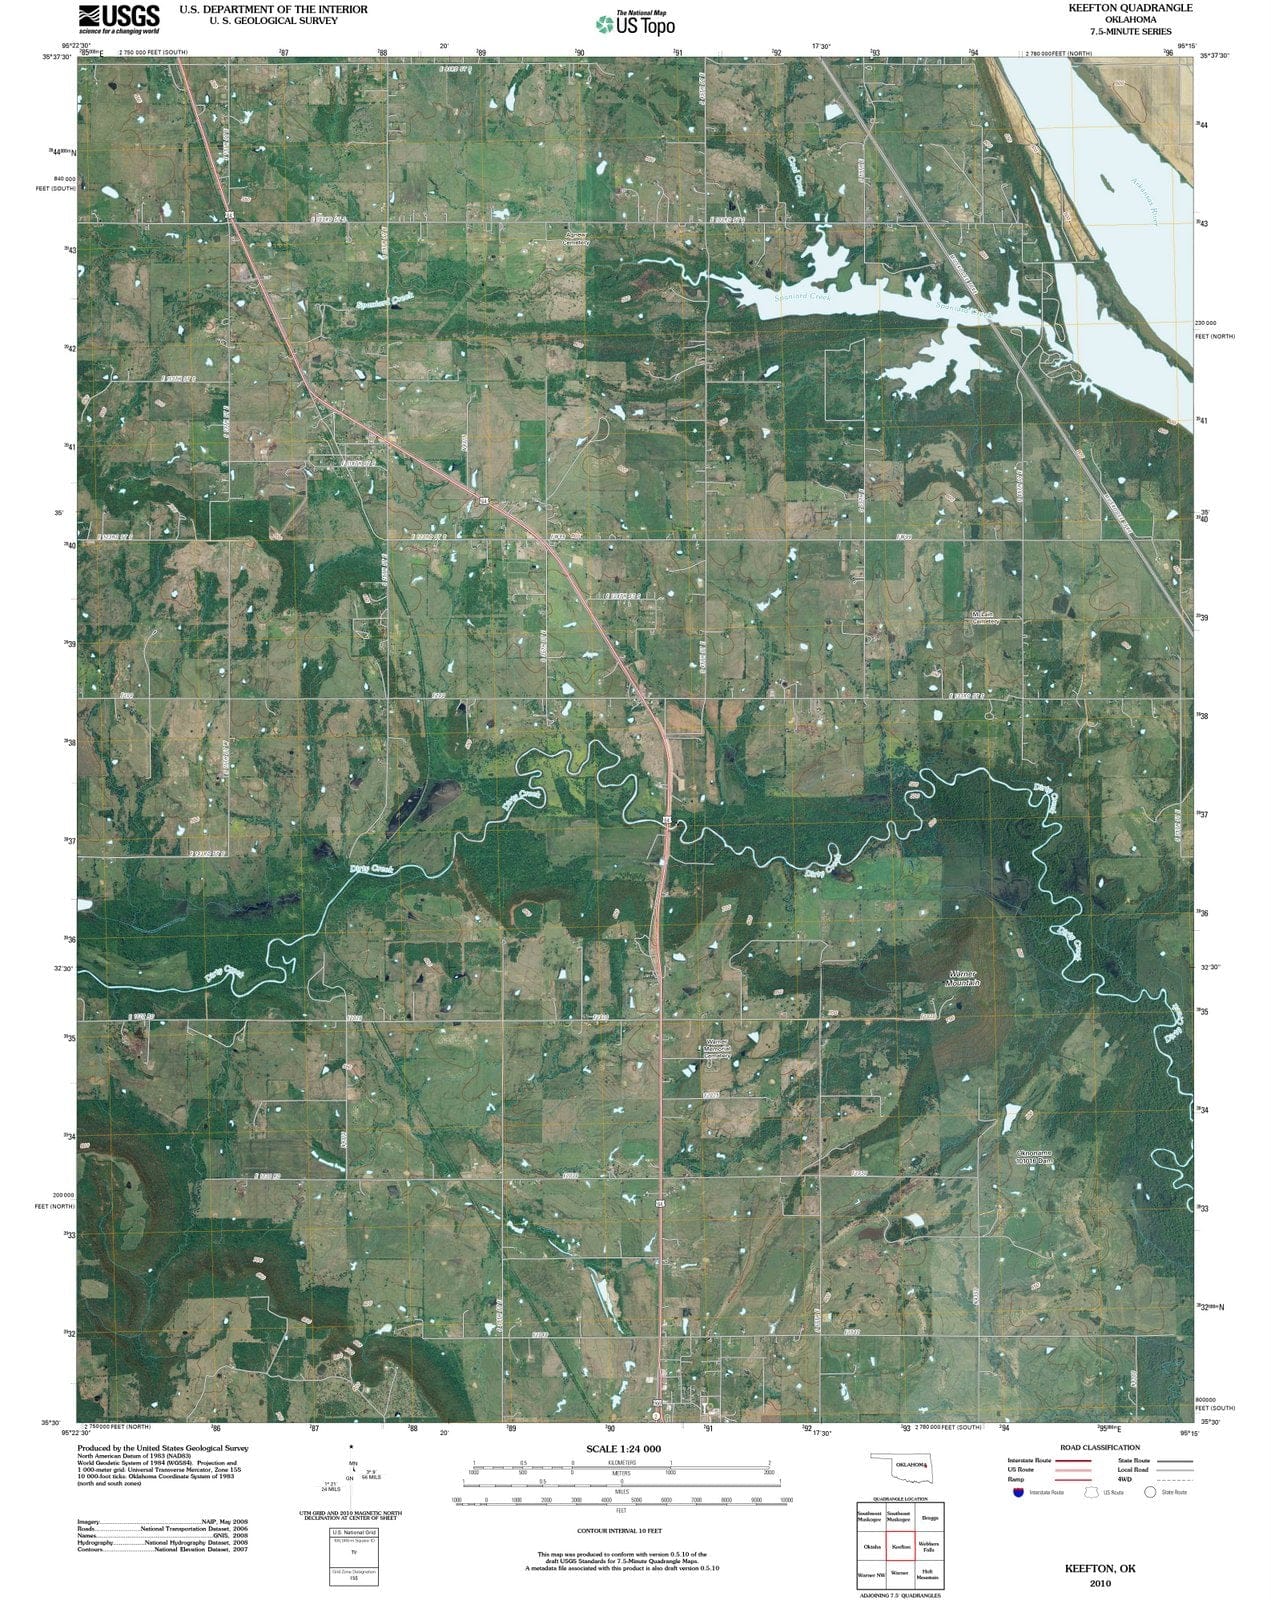 2010 Keefton, OK - Oklahoma - USGS Topographic Map